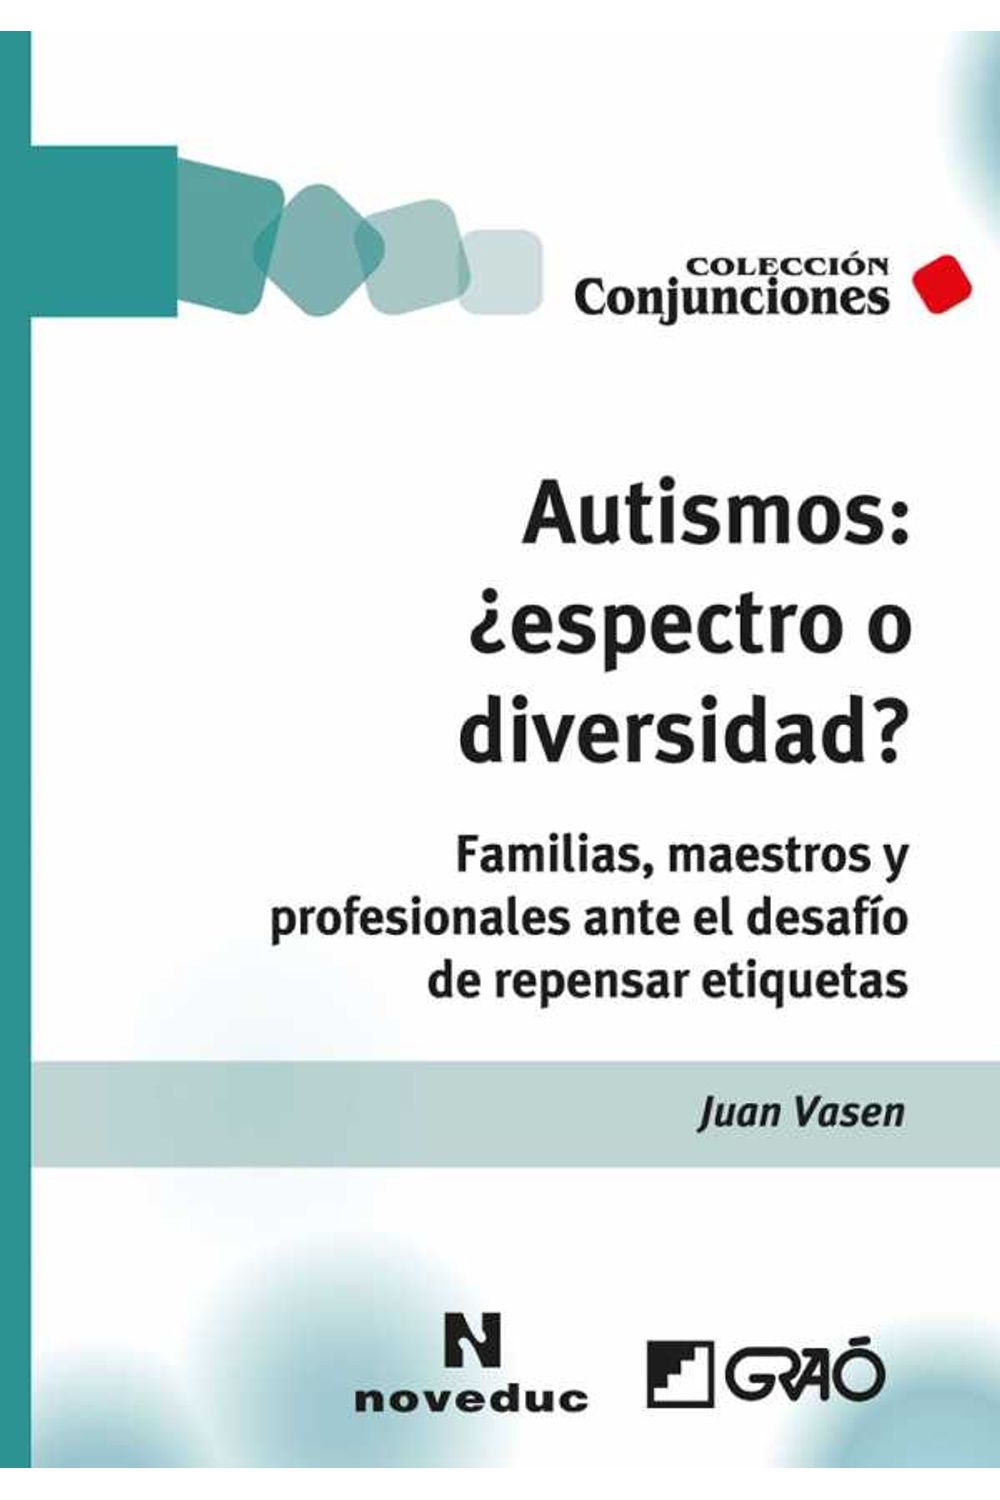 bm-autismos-espectro-o-diversidad-editorial-grao-9788499806723